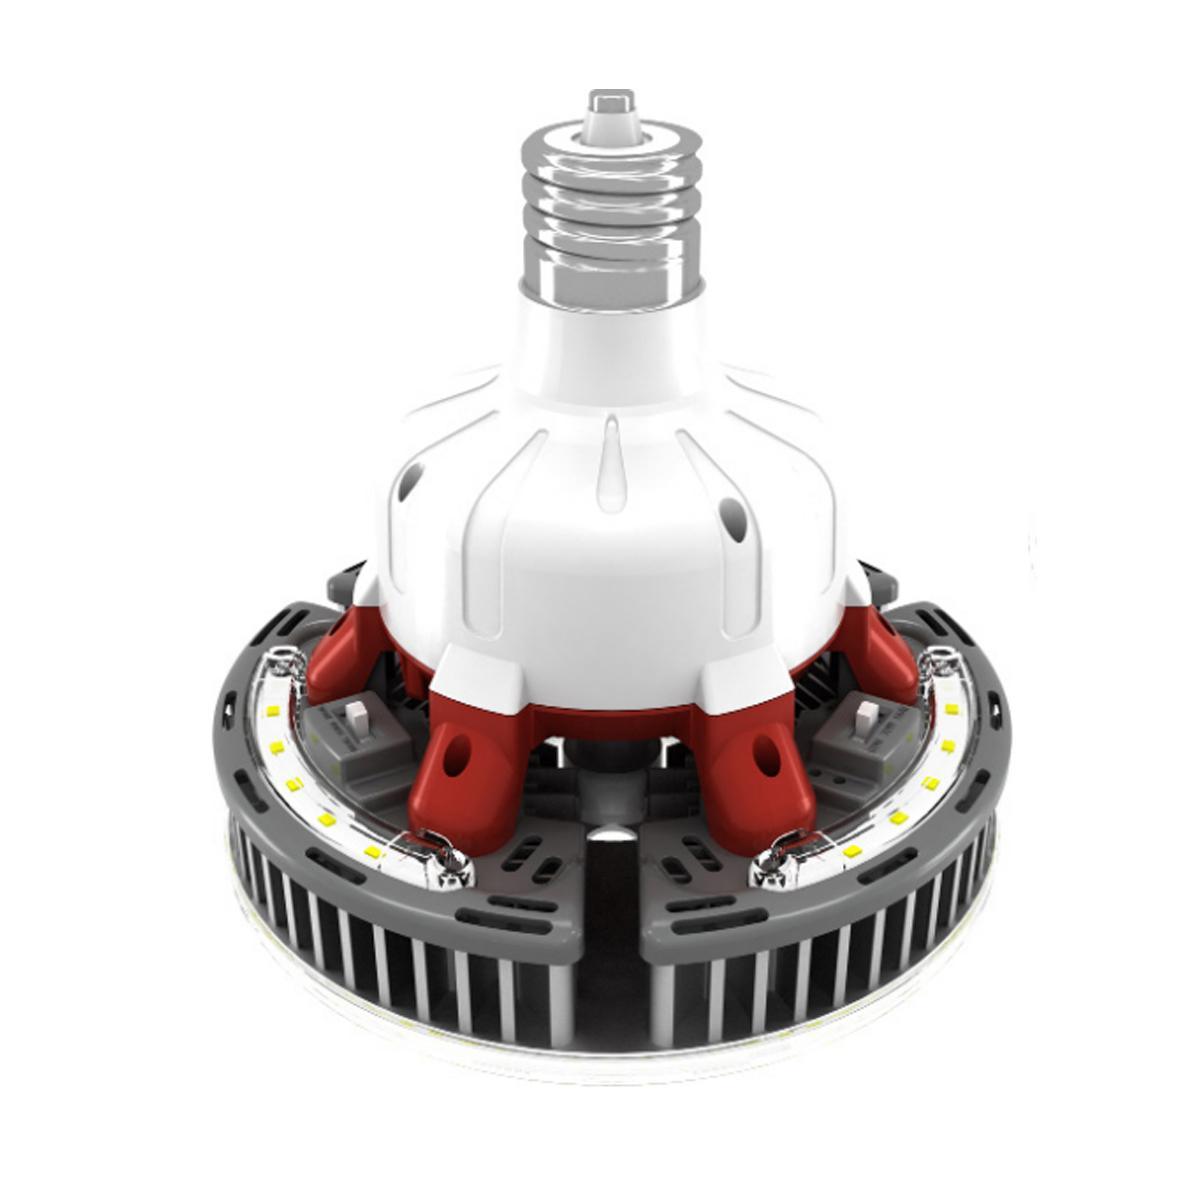 Retrofit LED High Bay Bulb, 80W, 11704 Lumens, Selectable CCT, 30K/40K/50K, EX39 Mogul Extended Base, 120-277V - Bees Lighting